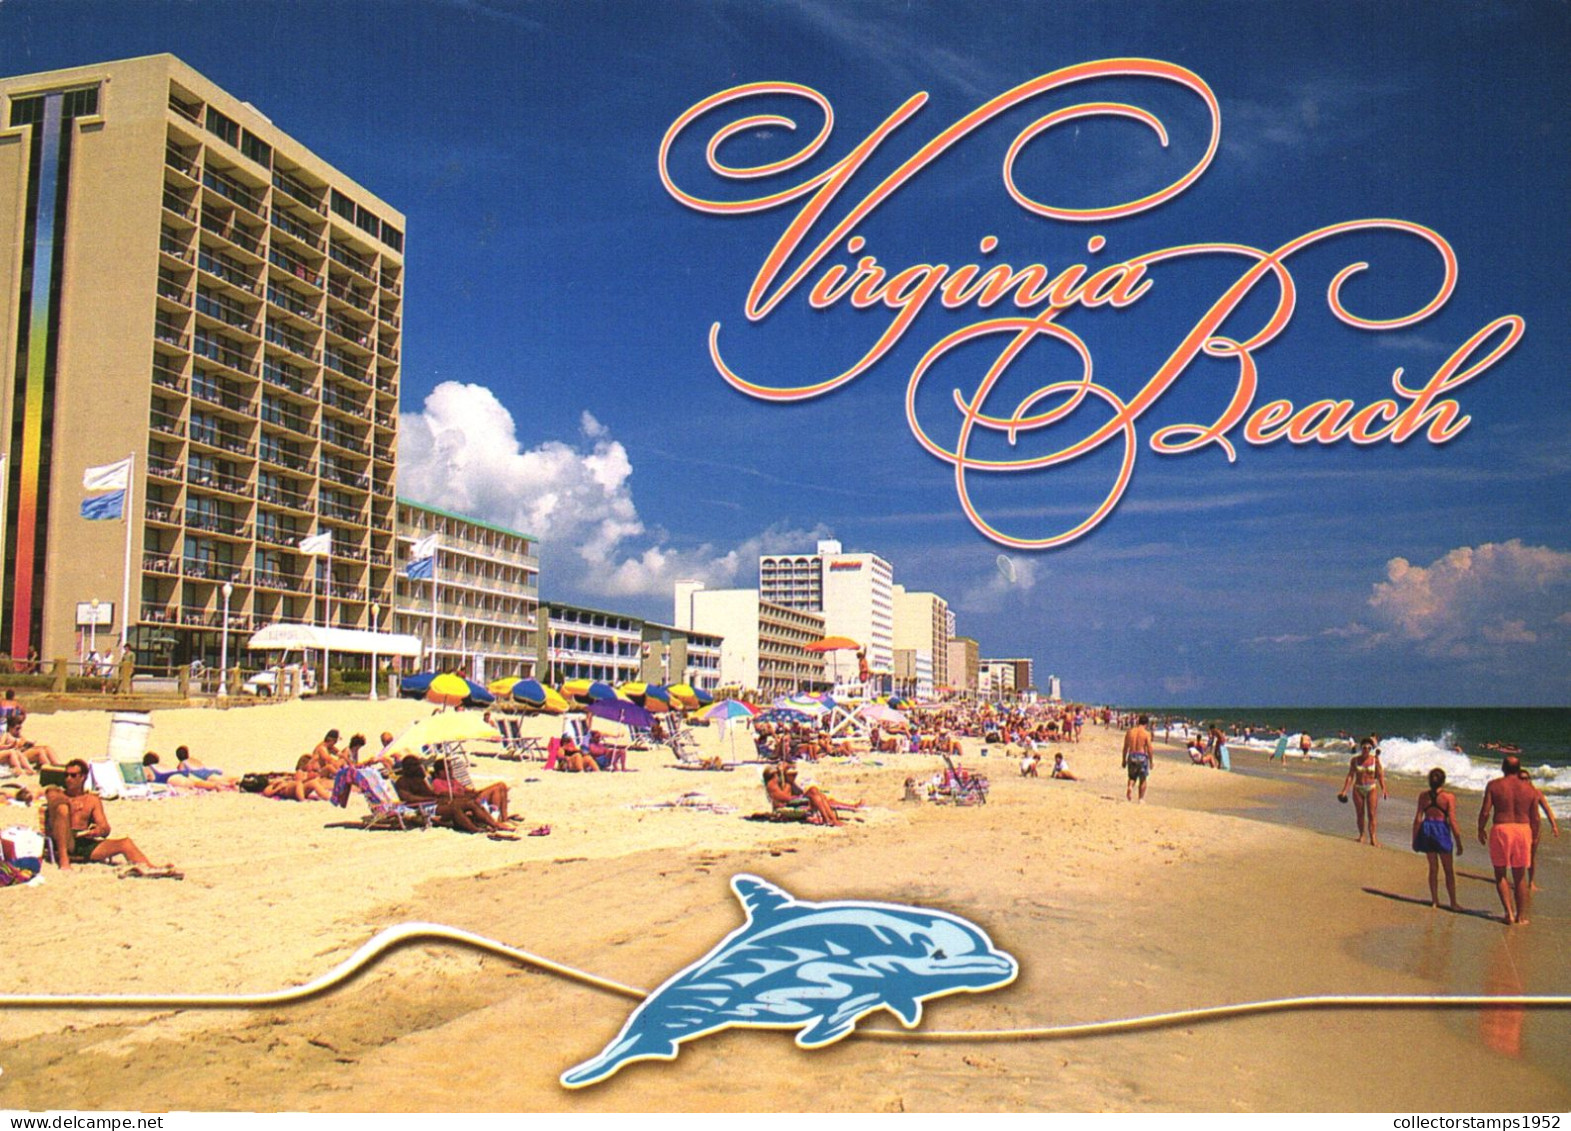 VIRGINIA BEACH, ARCHITECTURE, DELPHIN, UMBRELLA, UNITED STATES - Virginia Beach